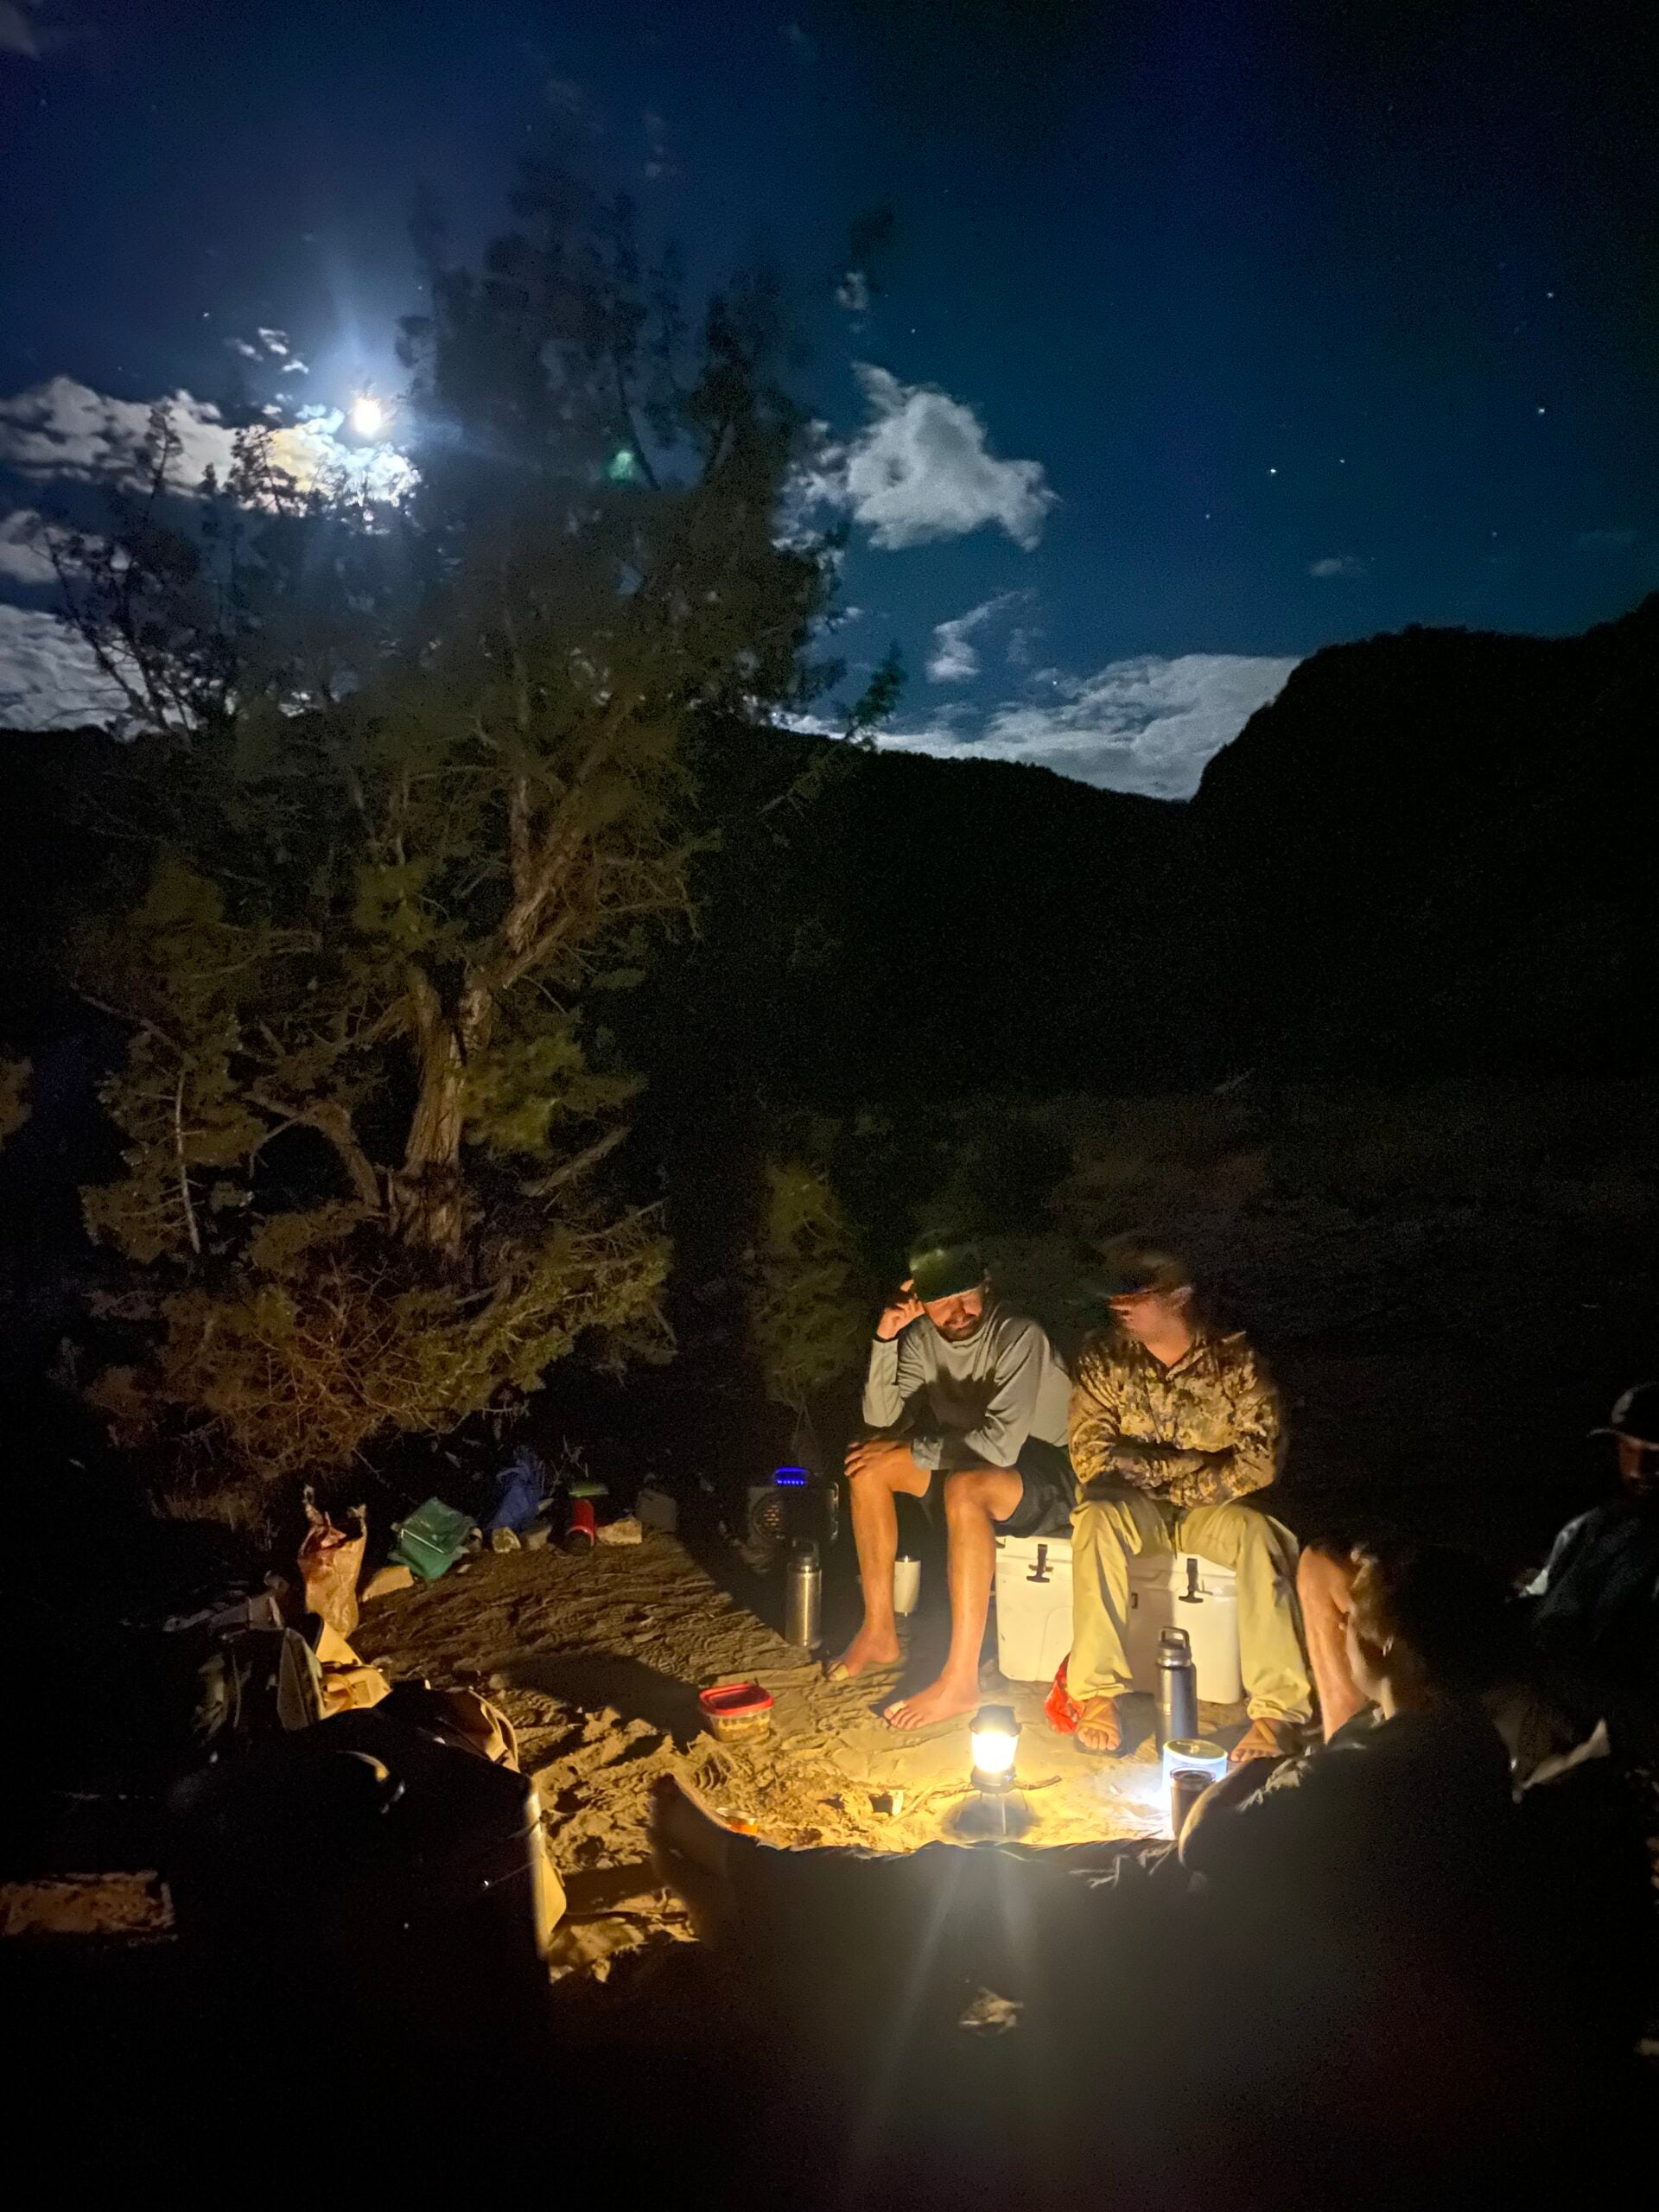 Hunters sitting around a campfire at night